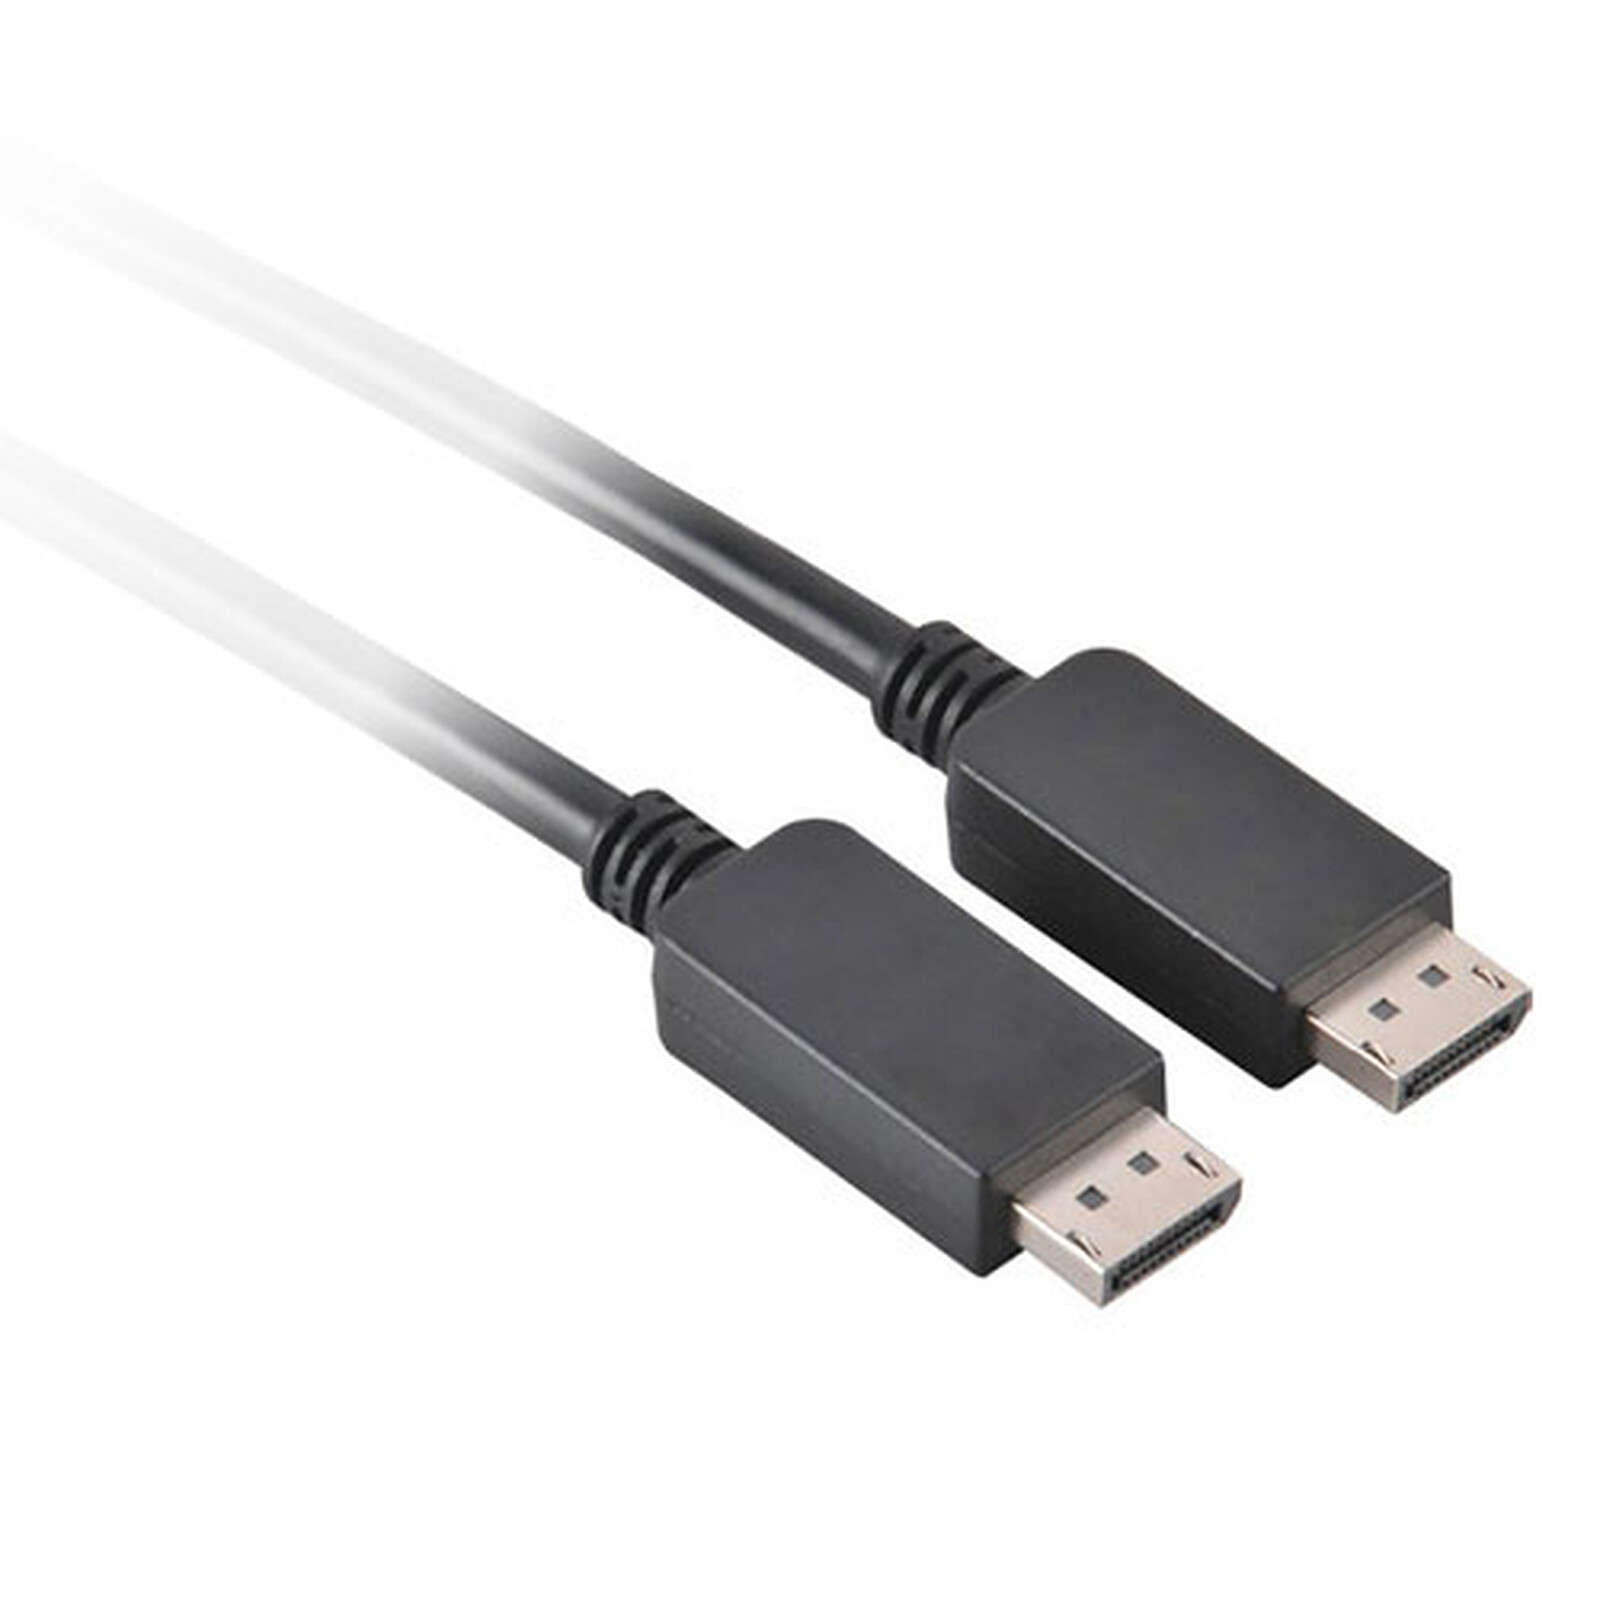 StarTech.com Adaptateur video Mini DisplayPort vers HDMI - DisplayPort -  Garantie 3 ans LDLC